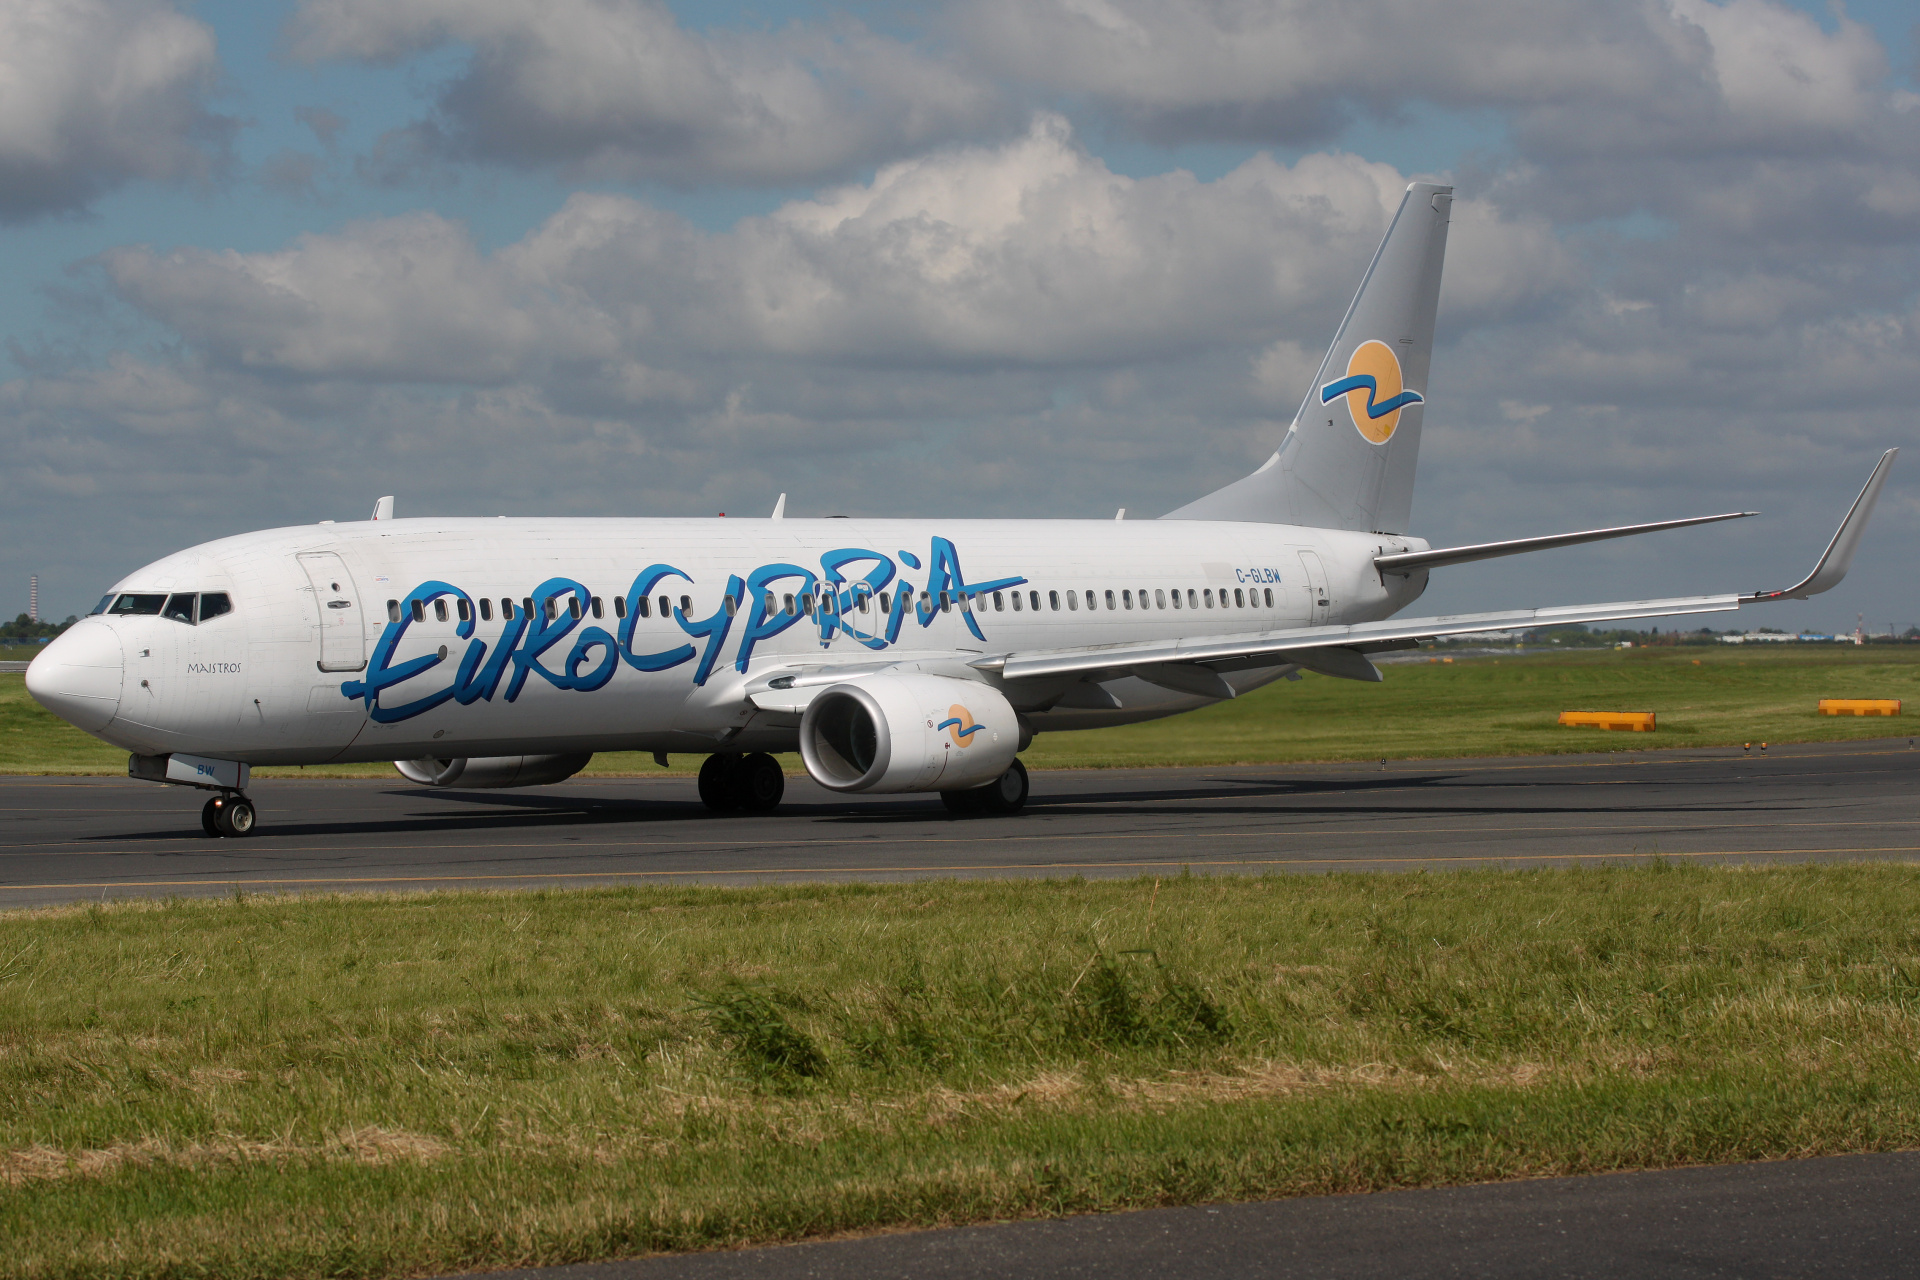 C-GLBW (Aircraft » EPWA Spotting » Boeing 737-800 » Eurocypria)